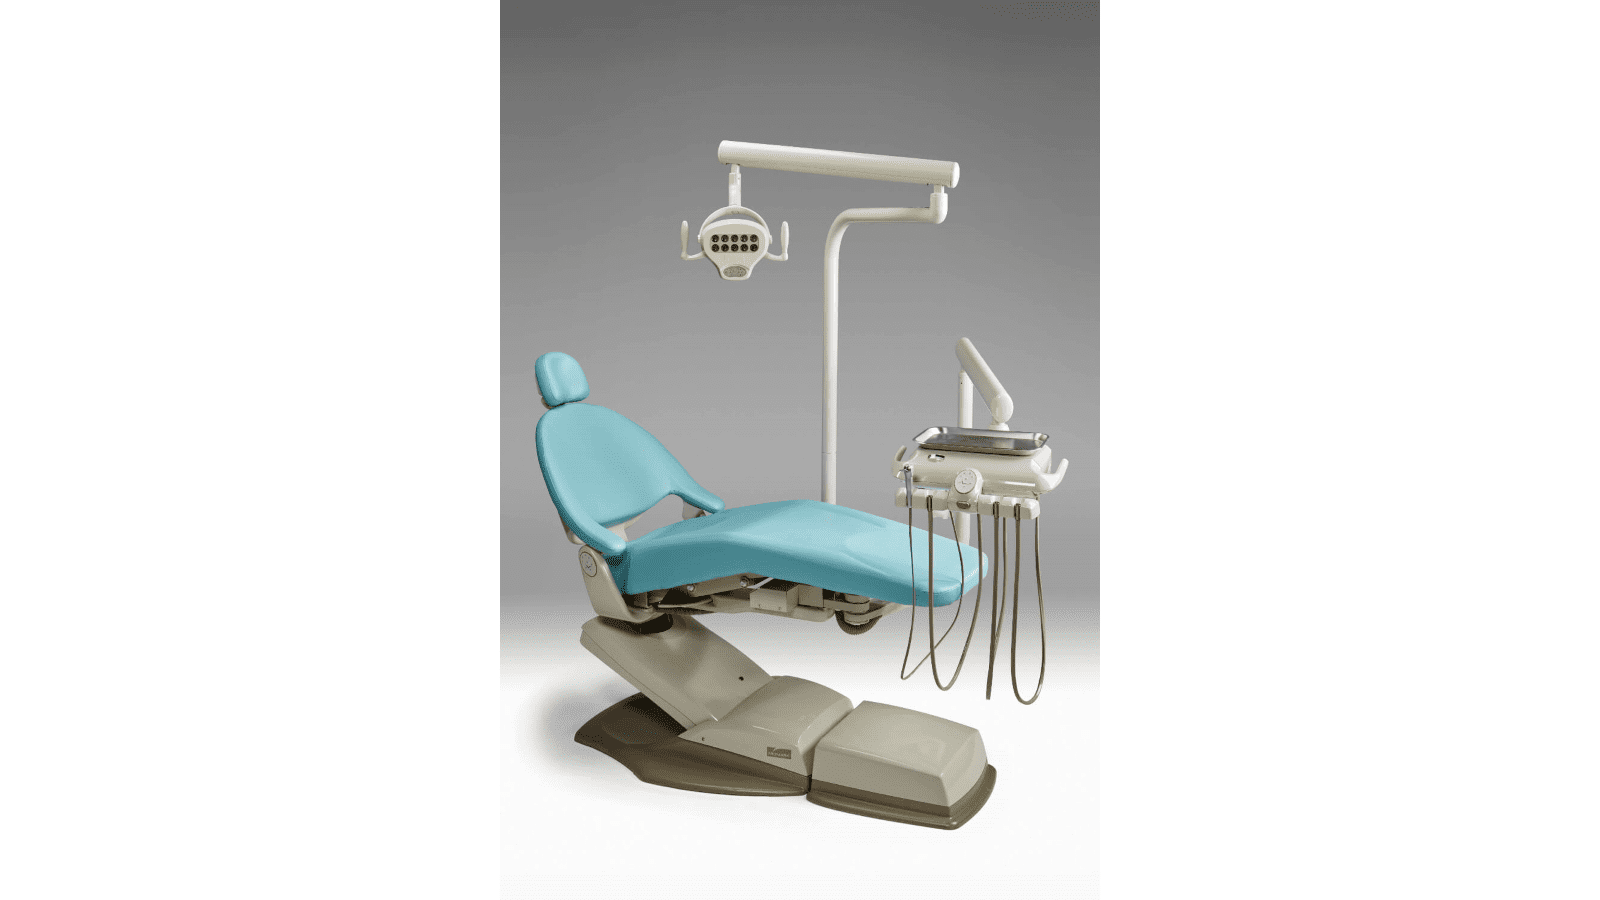 Midmark ultracomfort dental patient chair